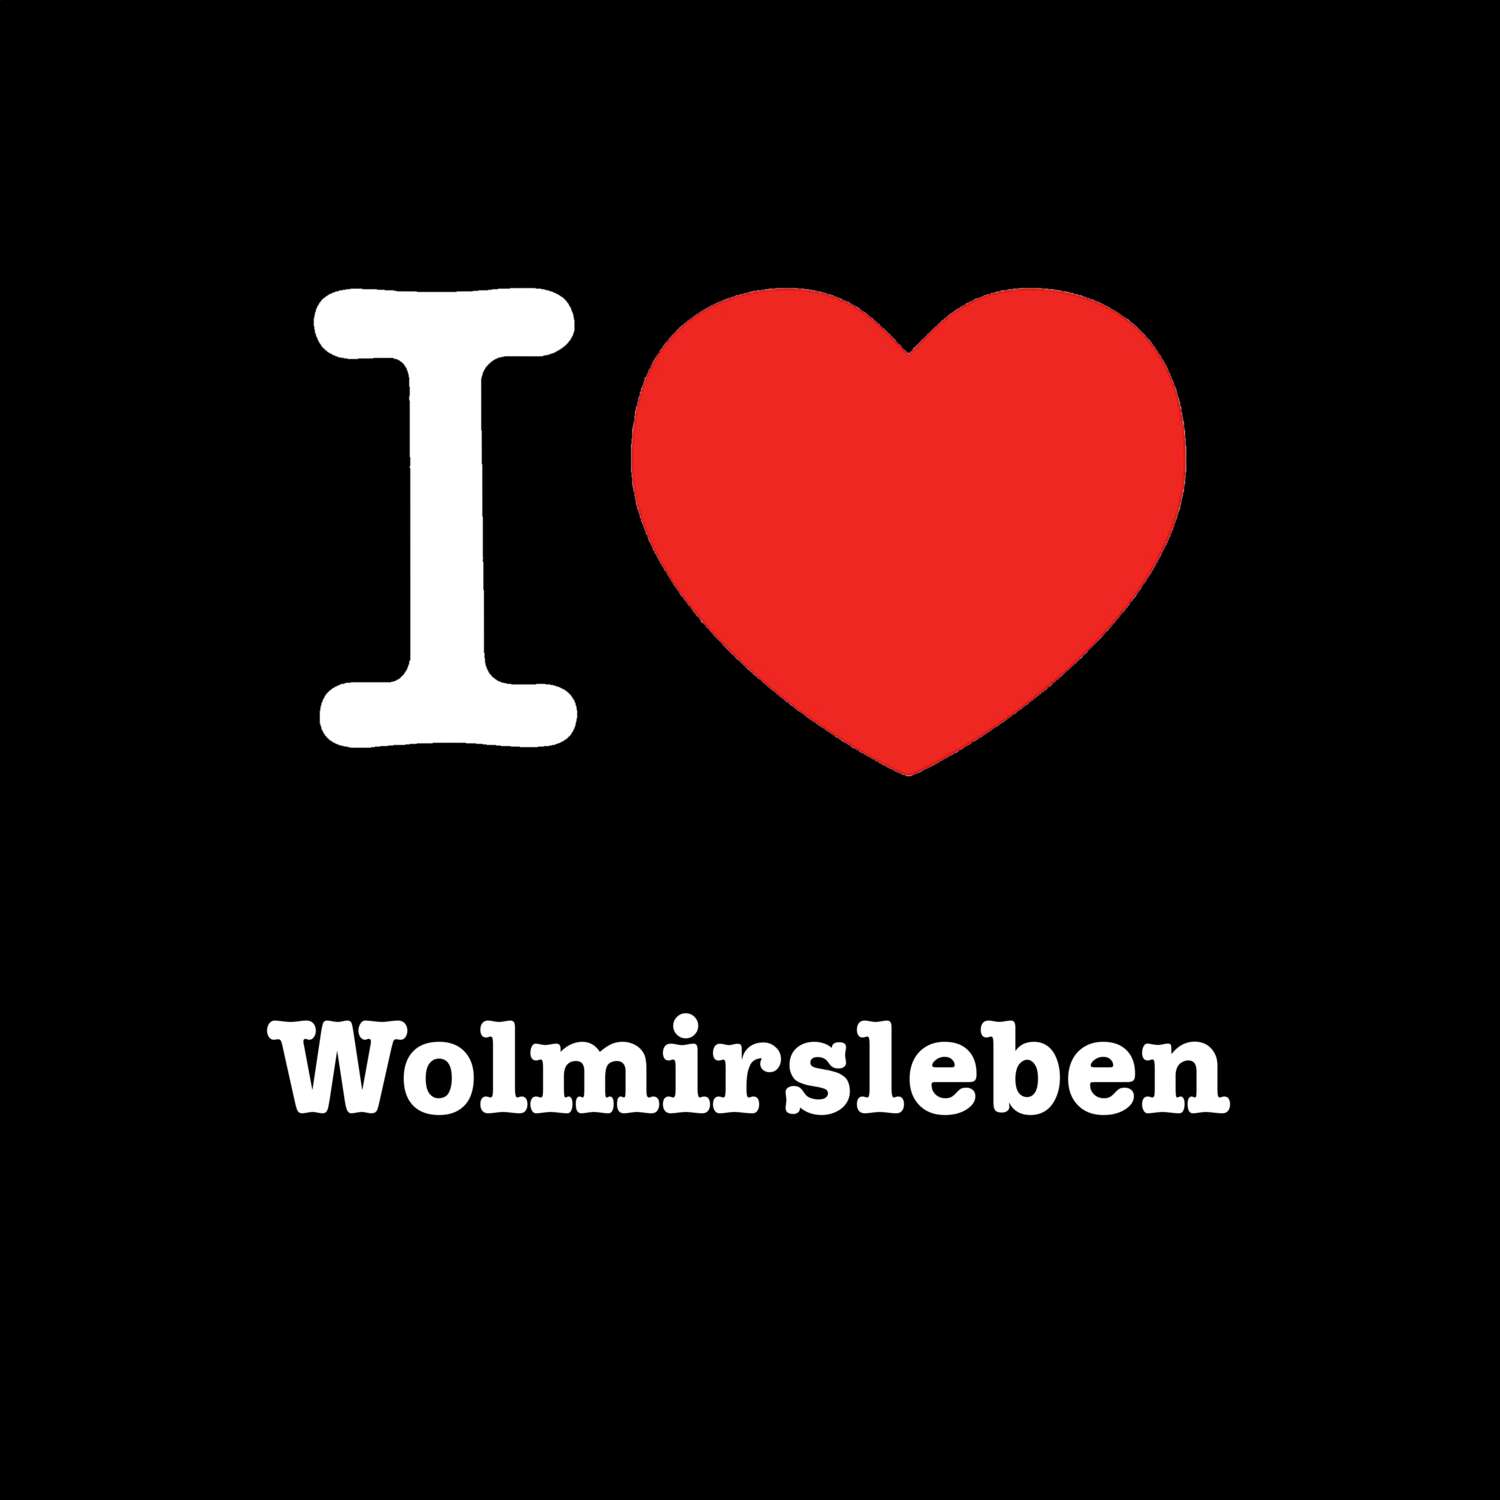 Wolmirsleben T-Shirt »I love«